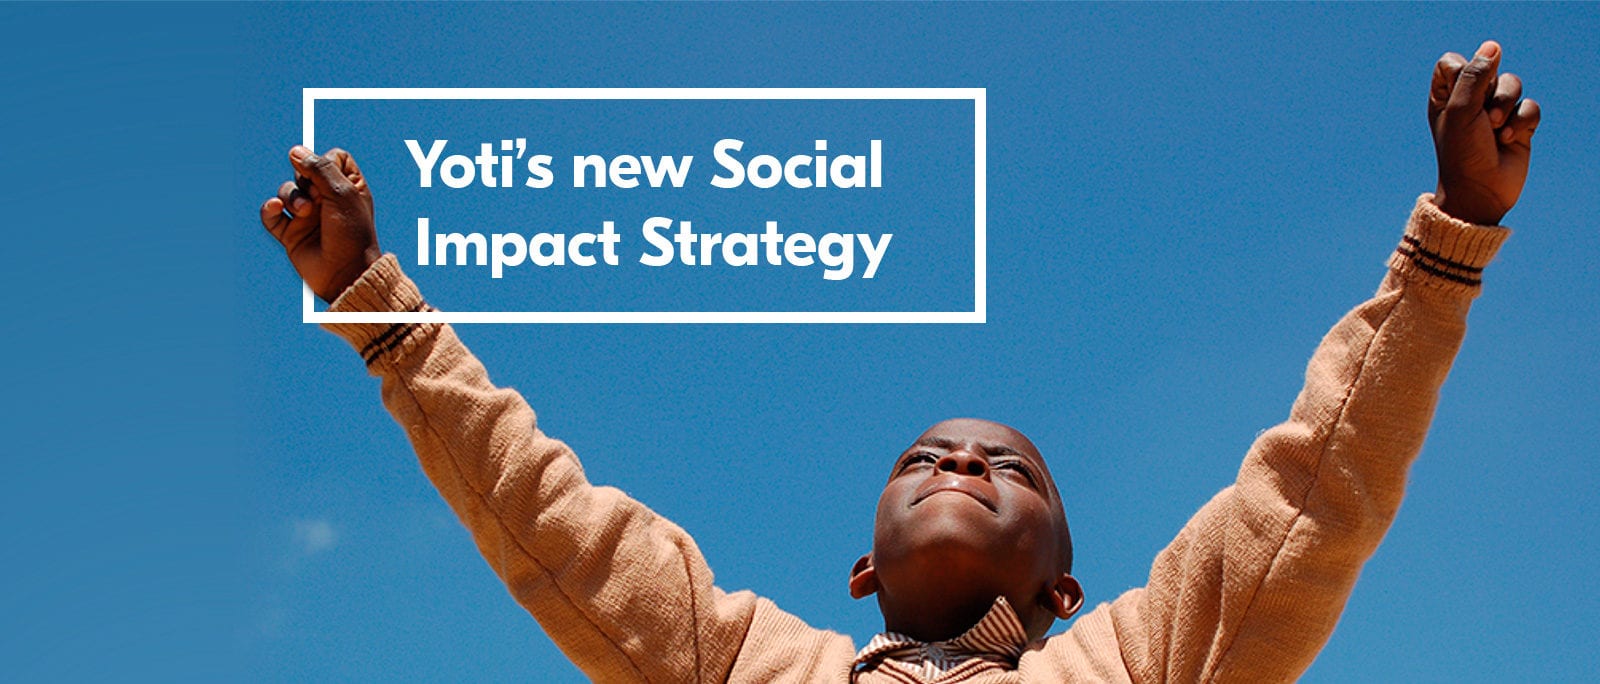 Say hello to Yoti’s new Social Purpose Strategy